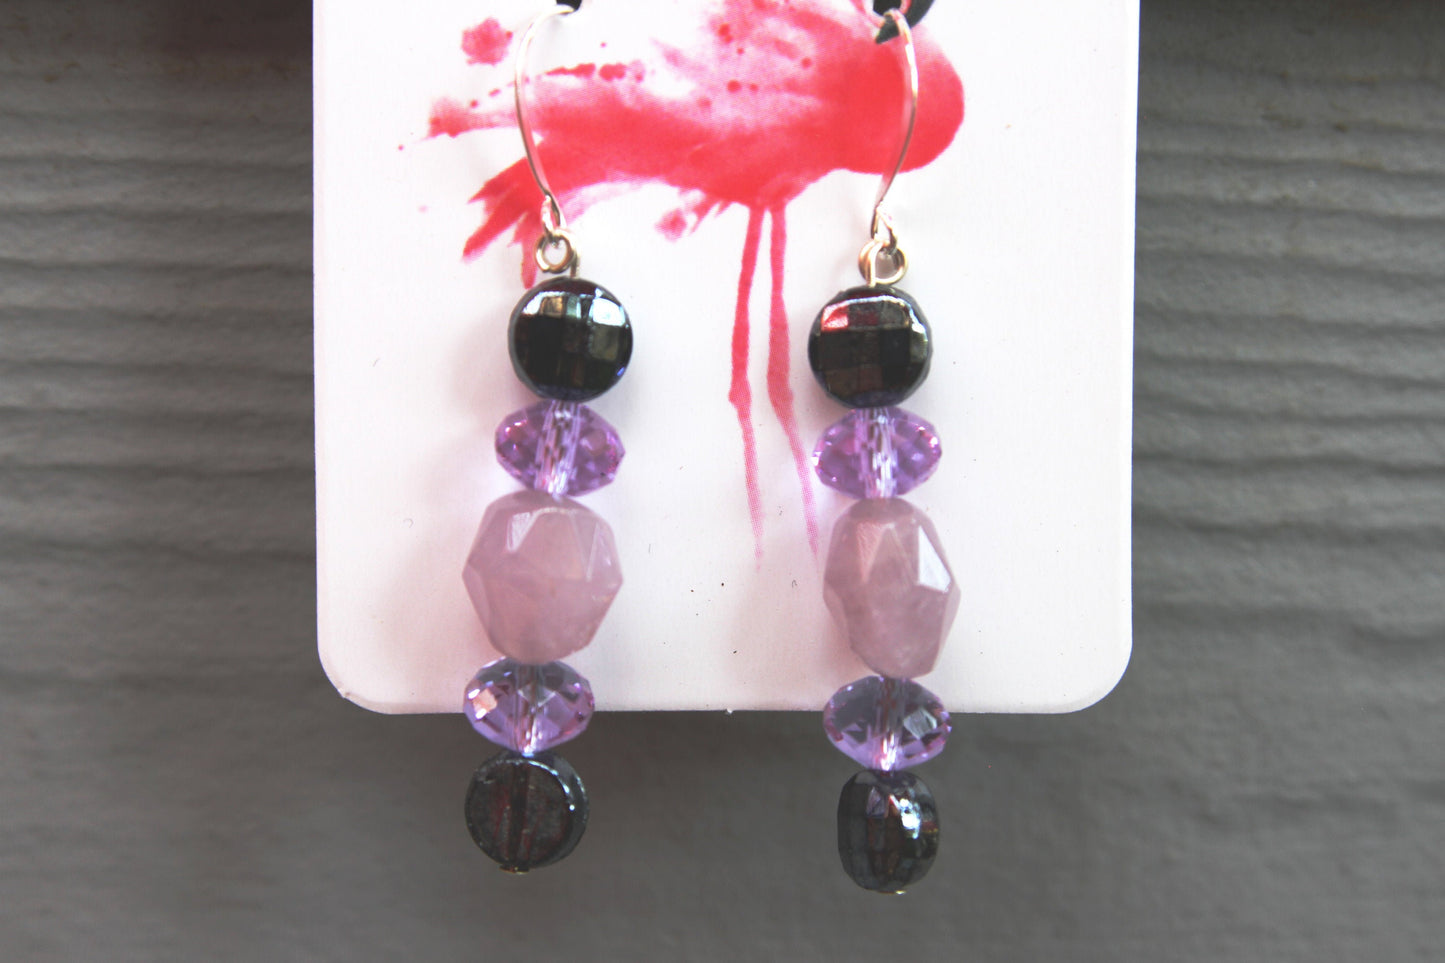 Lavender Quartz Gemstone and Swarvoski Crystal Earrings